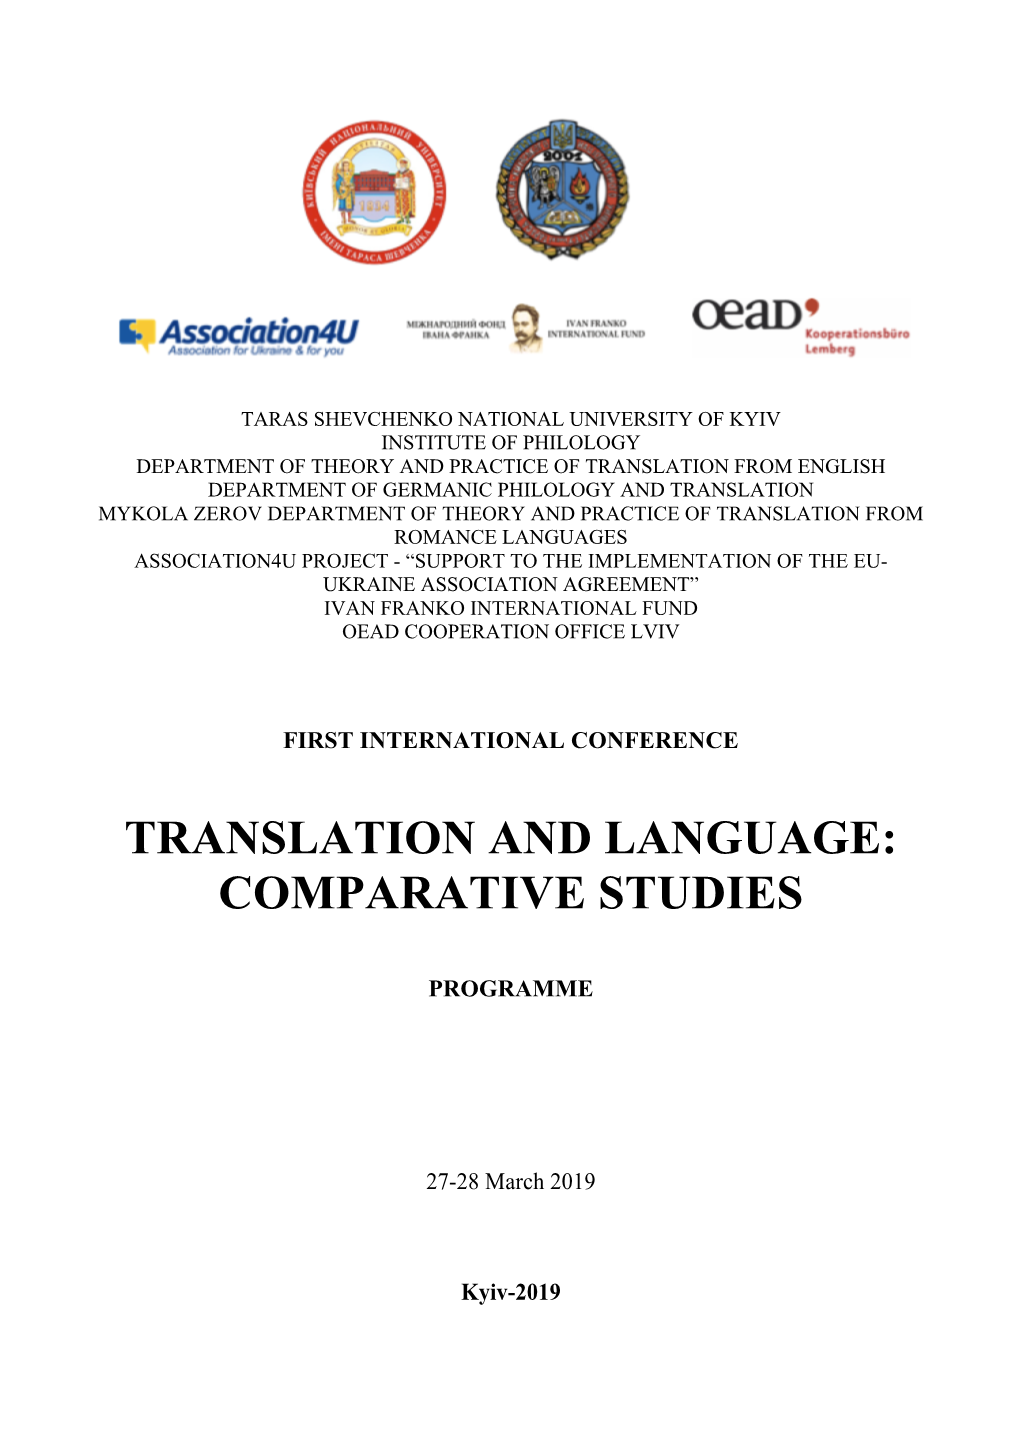 Translation and Language: Comparative Studies